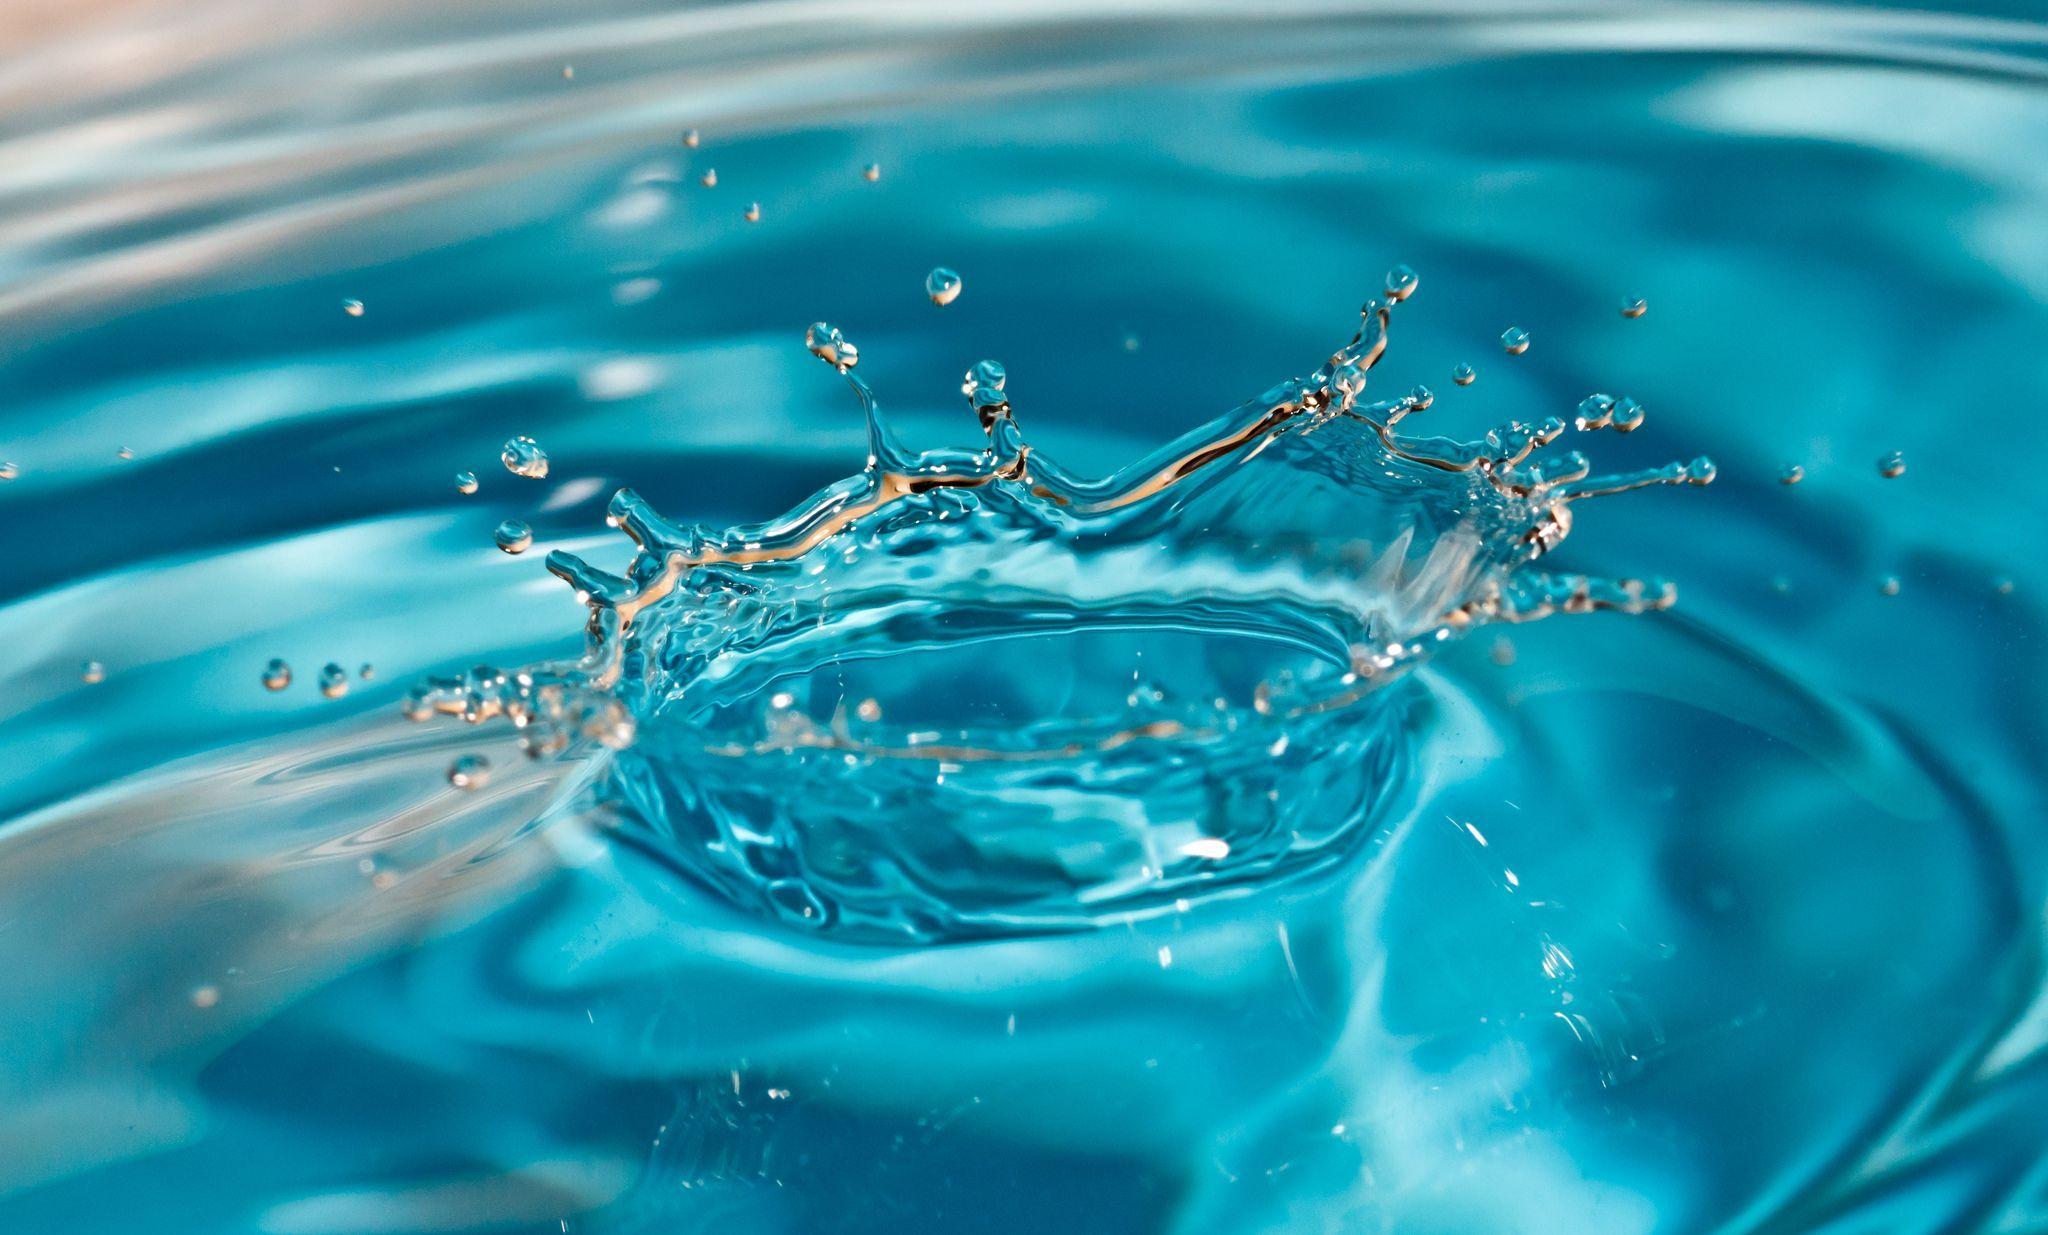 Splash Water Wallpaper. Water art, Water background, Nature photography